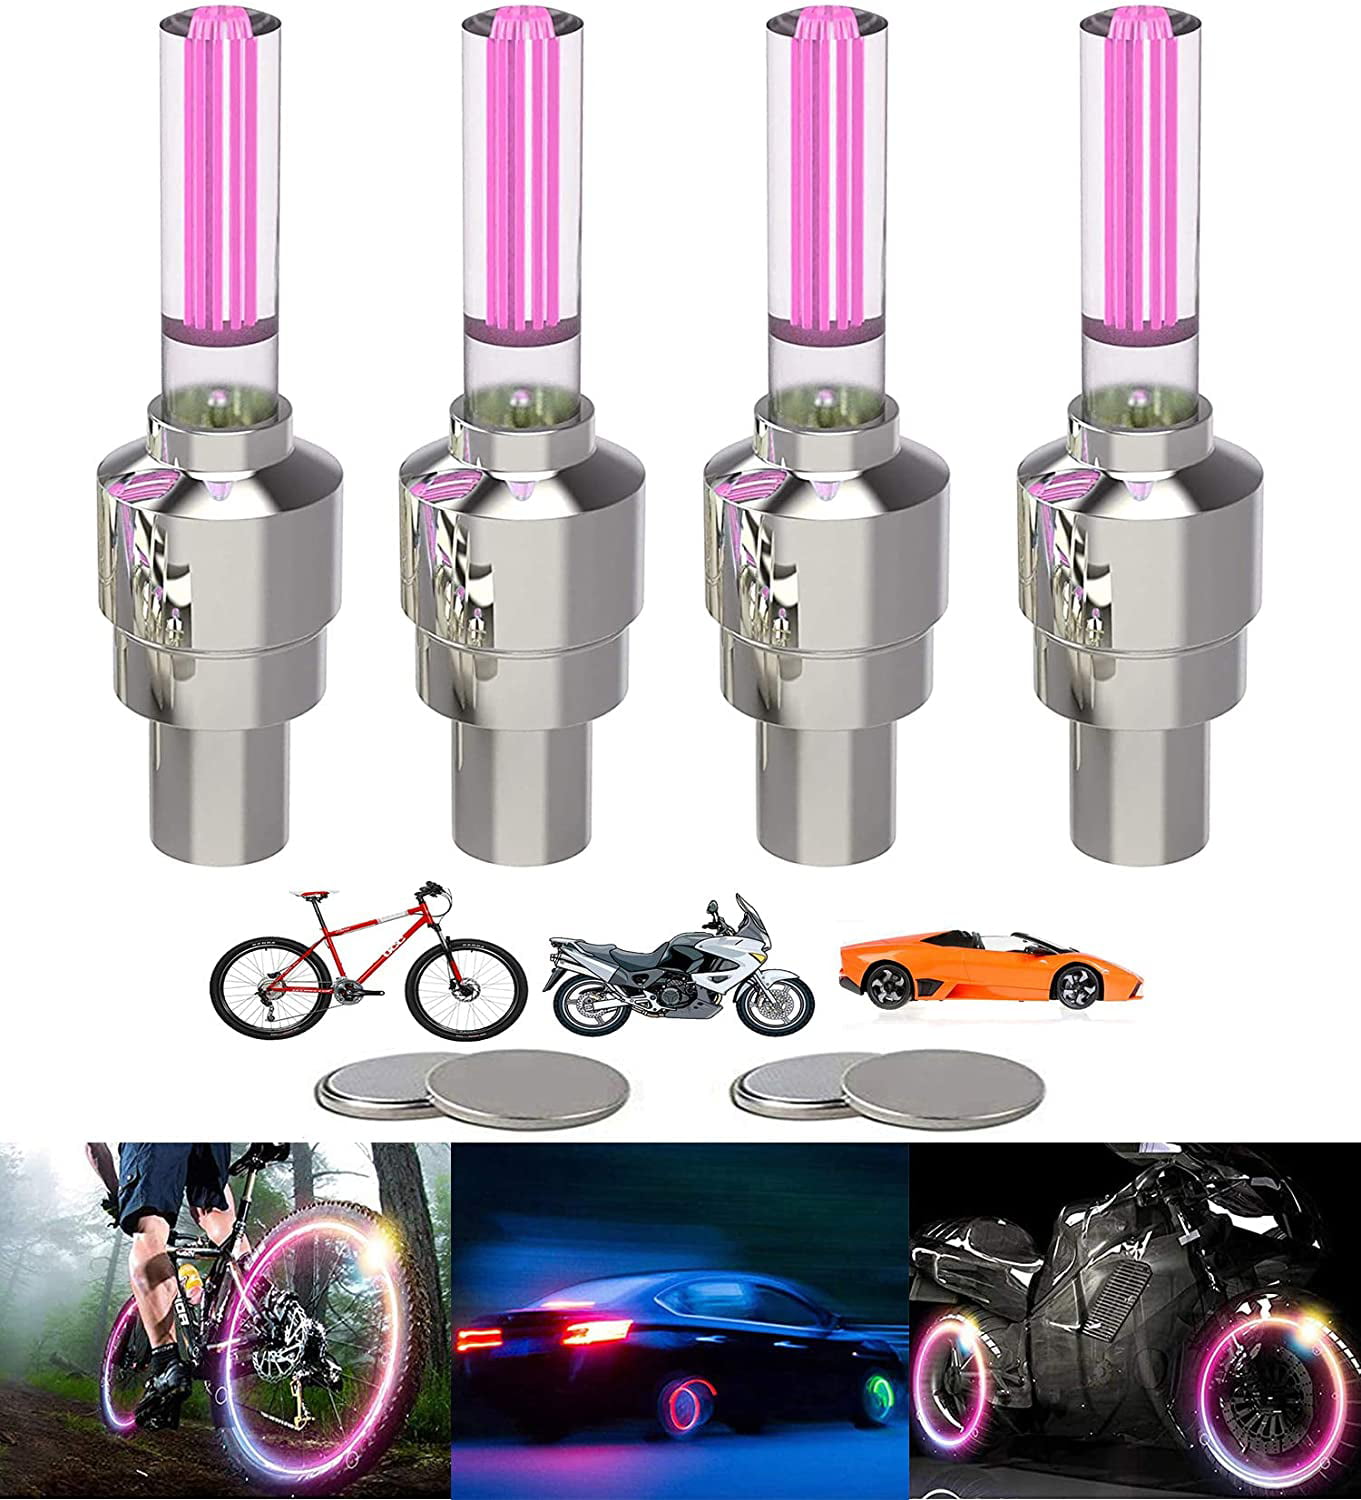 2 Pack/Set of LED Flash Tyre Wheel Valve Stem Cap Light LED Bike Wheel Lights for Car Bike Bicycle Motorbicycle Waterproof Tire Spoke Flash Lights with Extra Batteries 